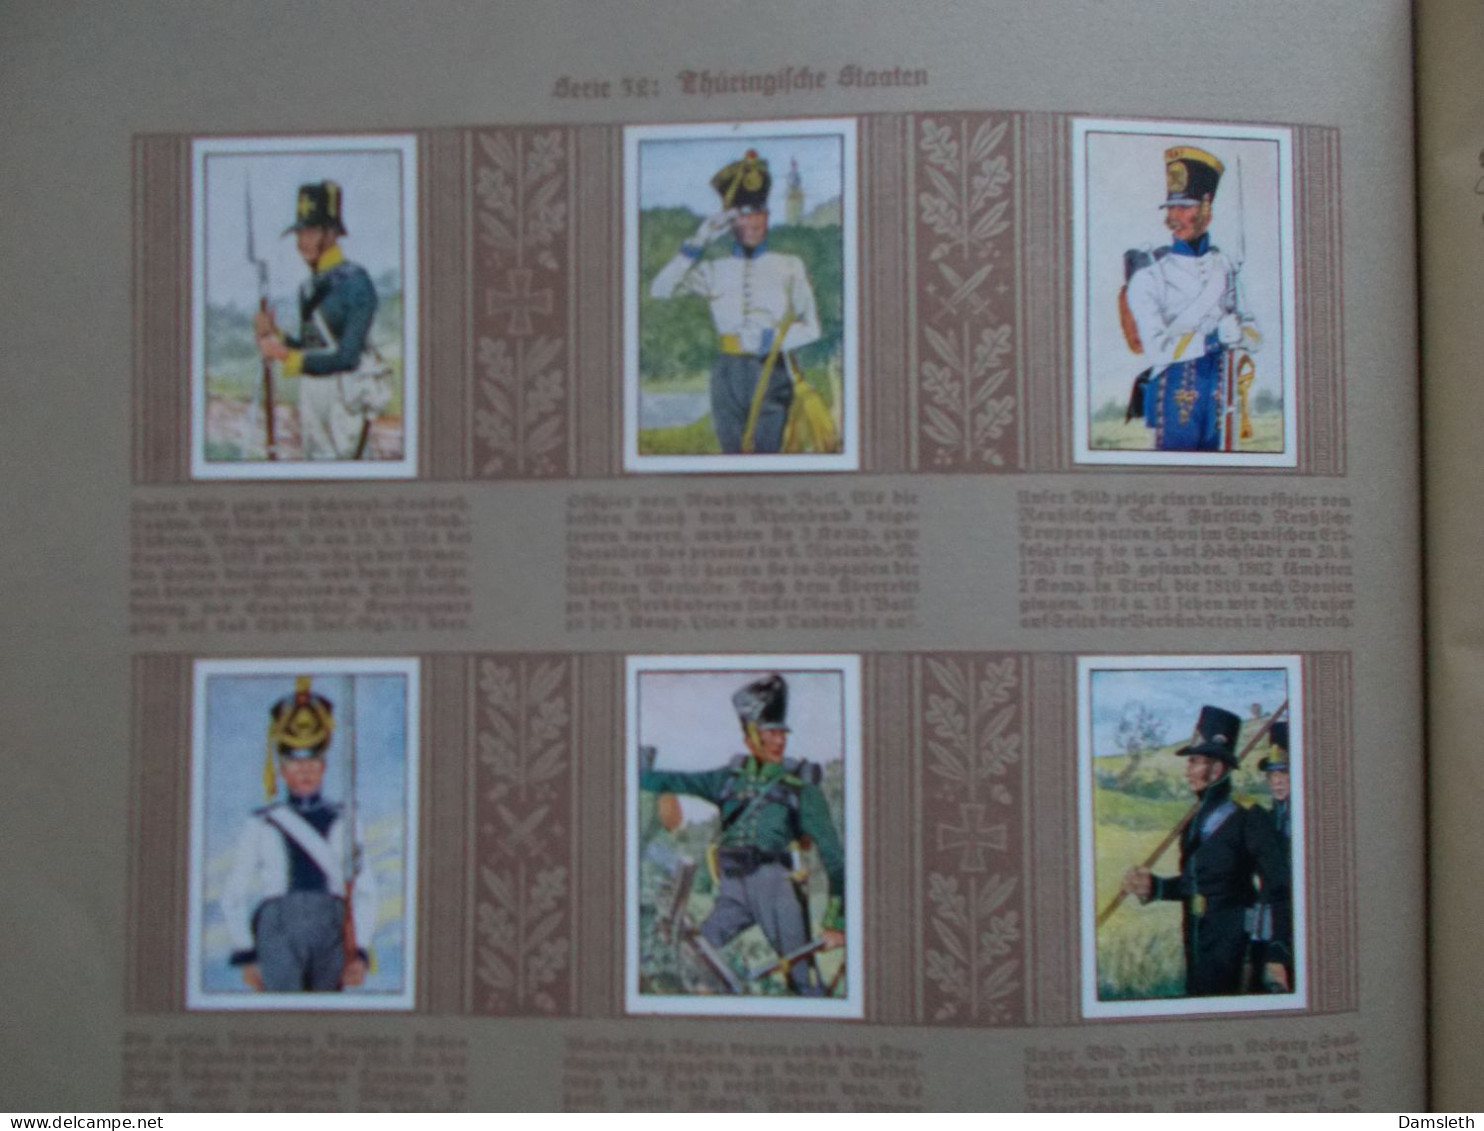 Germany Third Reich NSDAP-SA "Sturm" Zigaretten Album; cigarette card album; German Army uniforms, Freiheitskriege